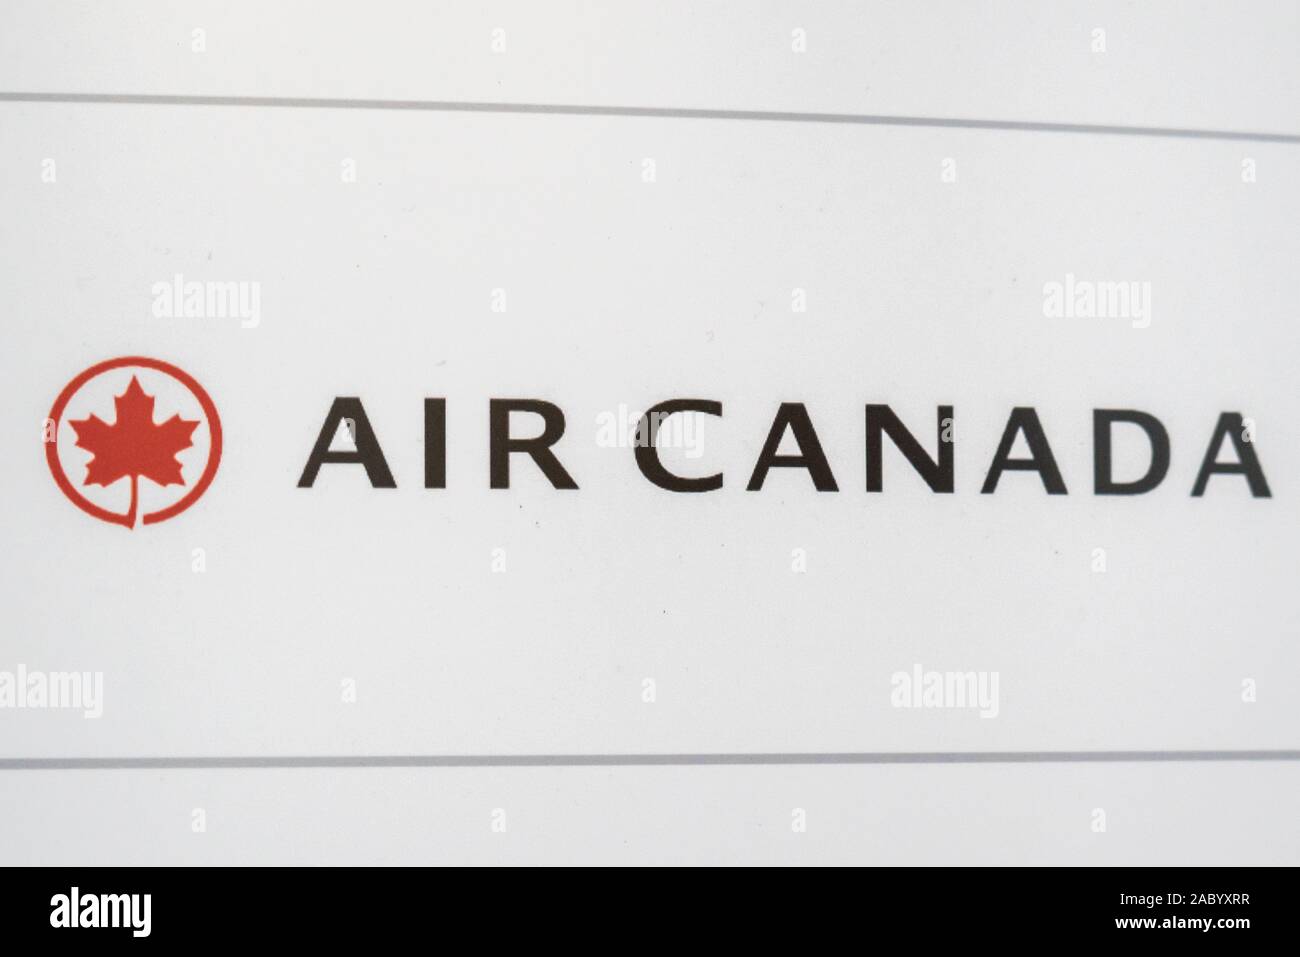 Air Canada logo seen at Hartsfield-Jackson Atlanta International Airport  Stock Photo - Alamy